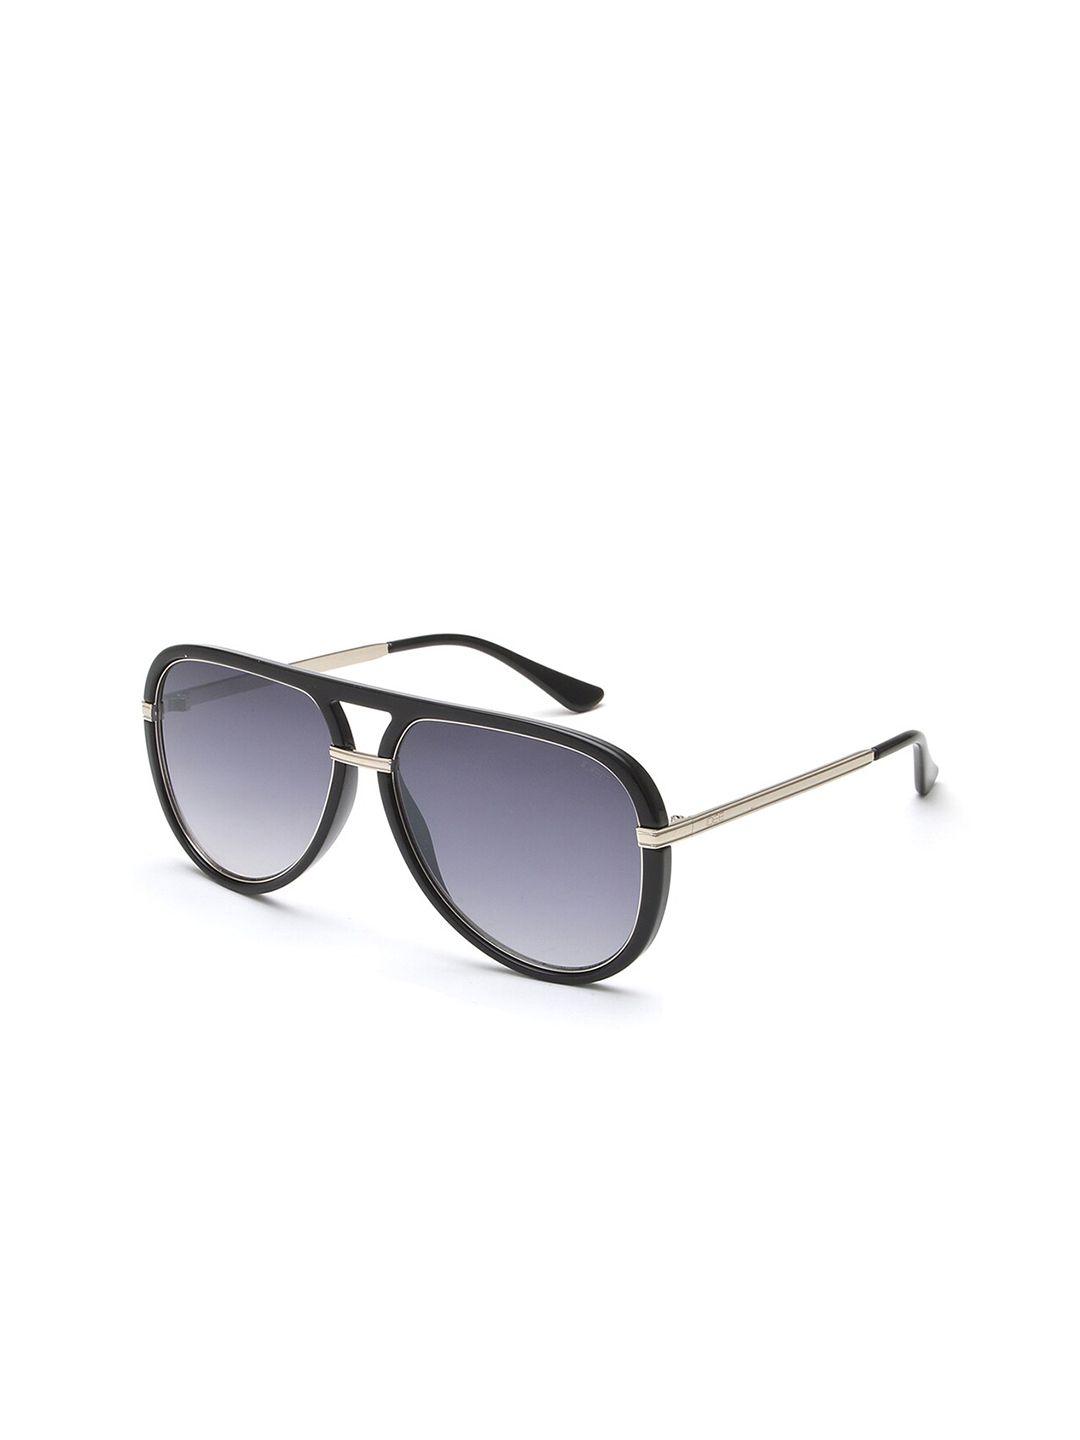 IDEE Men Grey Lens & Black Aviator Sunglasses with UV Protected Lens